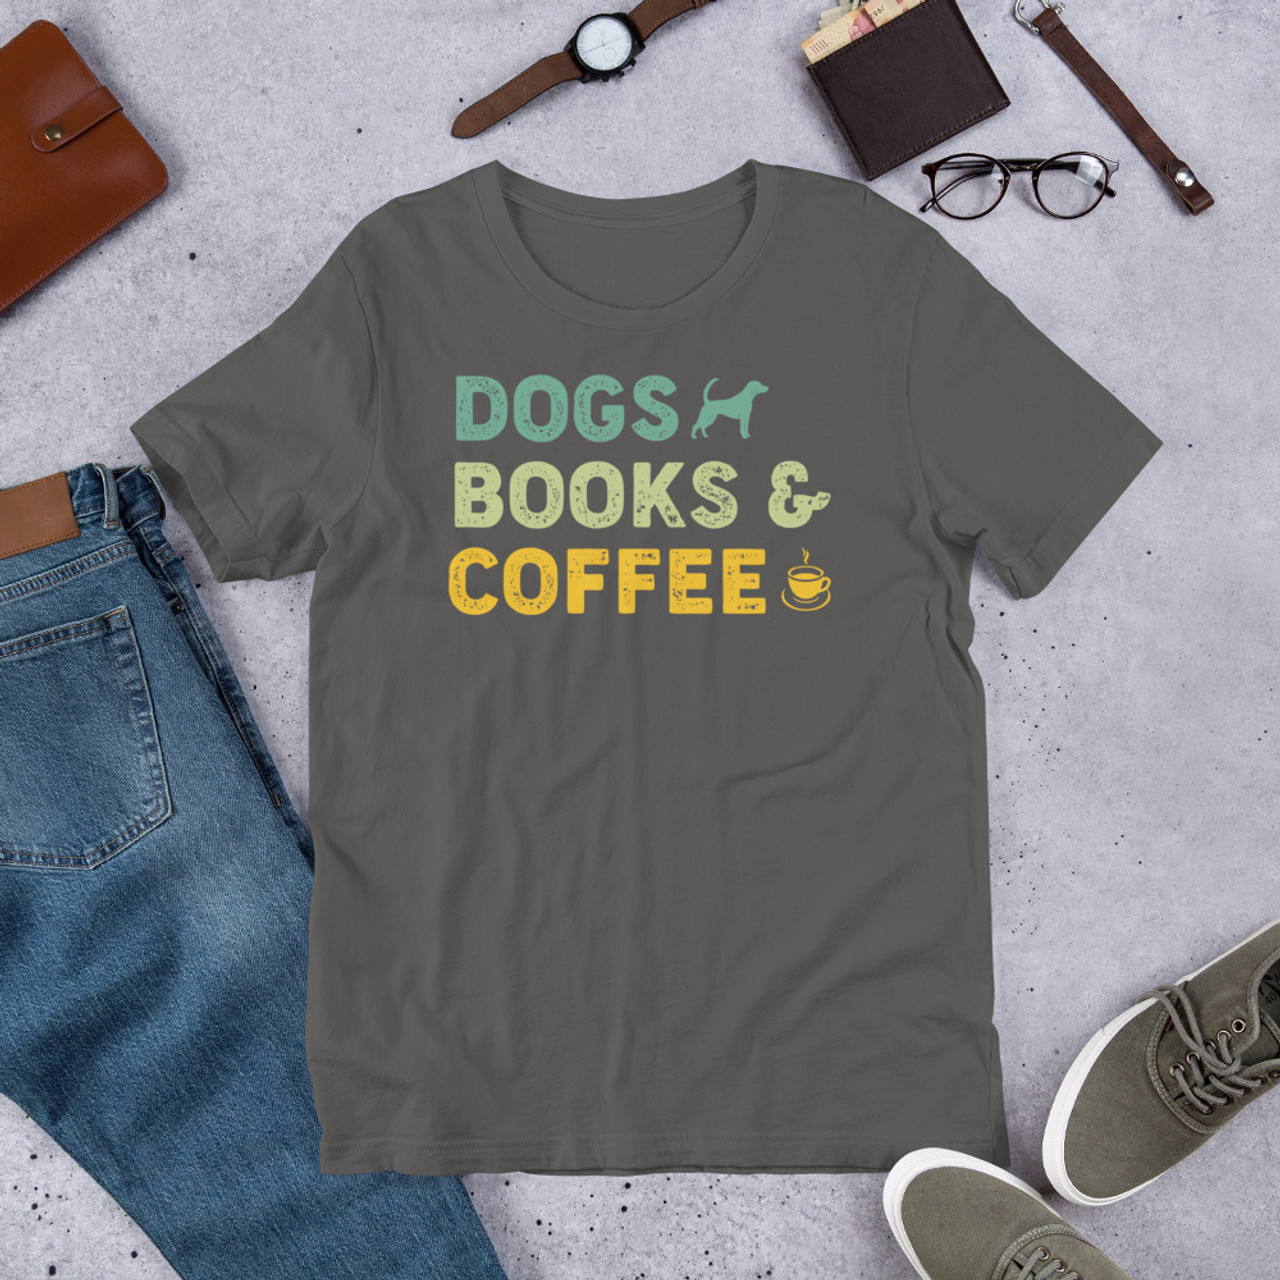 Asphalt T-Shirt - Bella + Canvas 3001 Dogs Books & Coffee